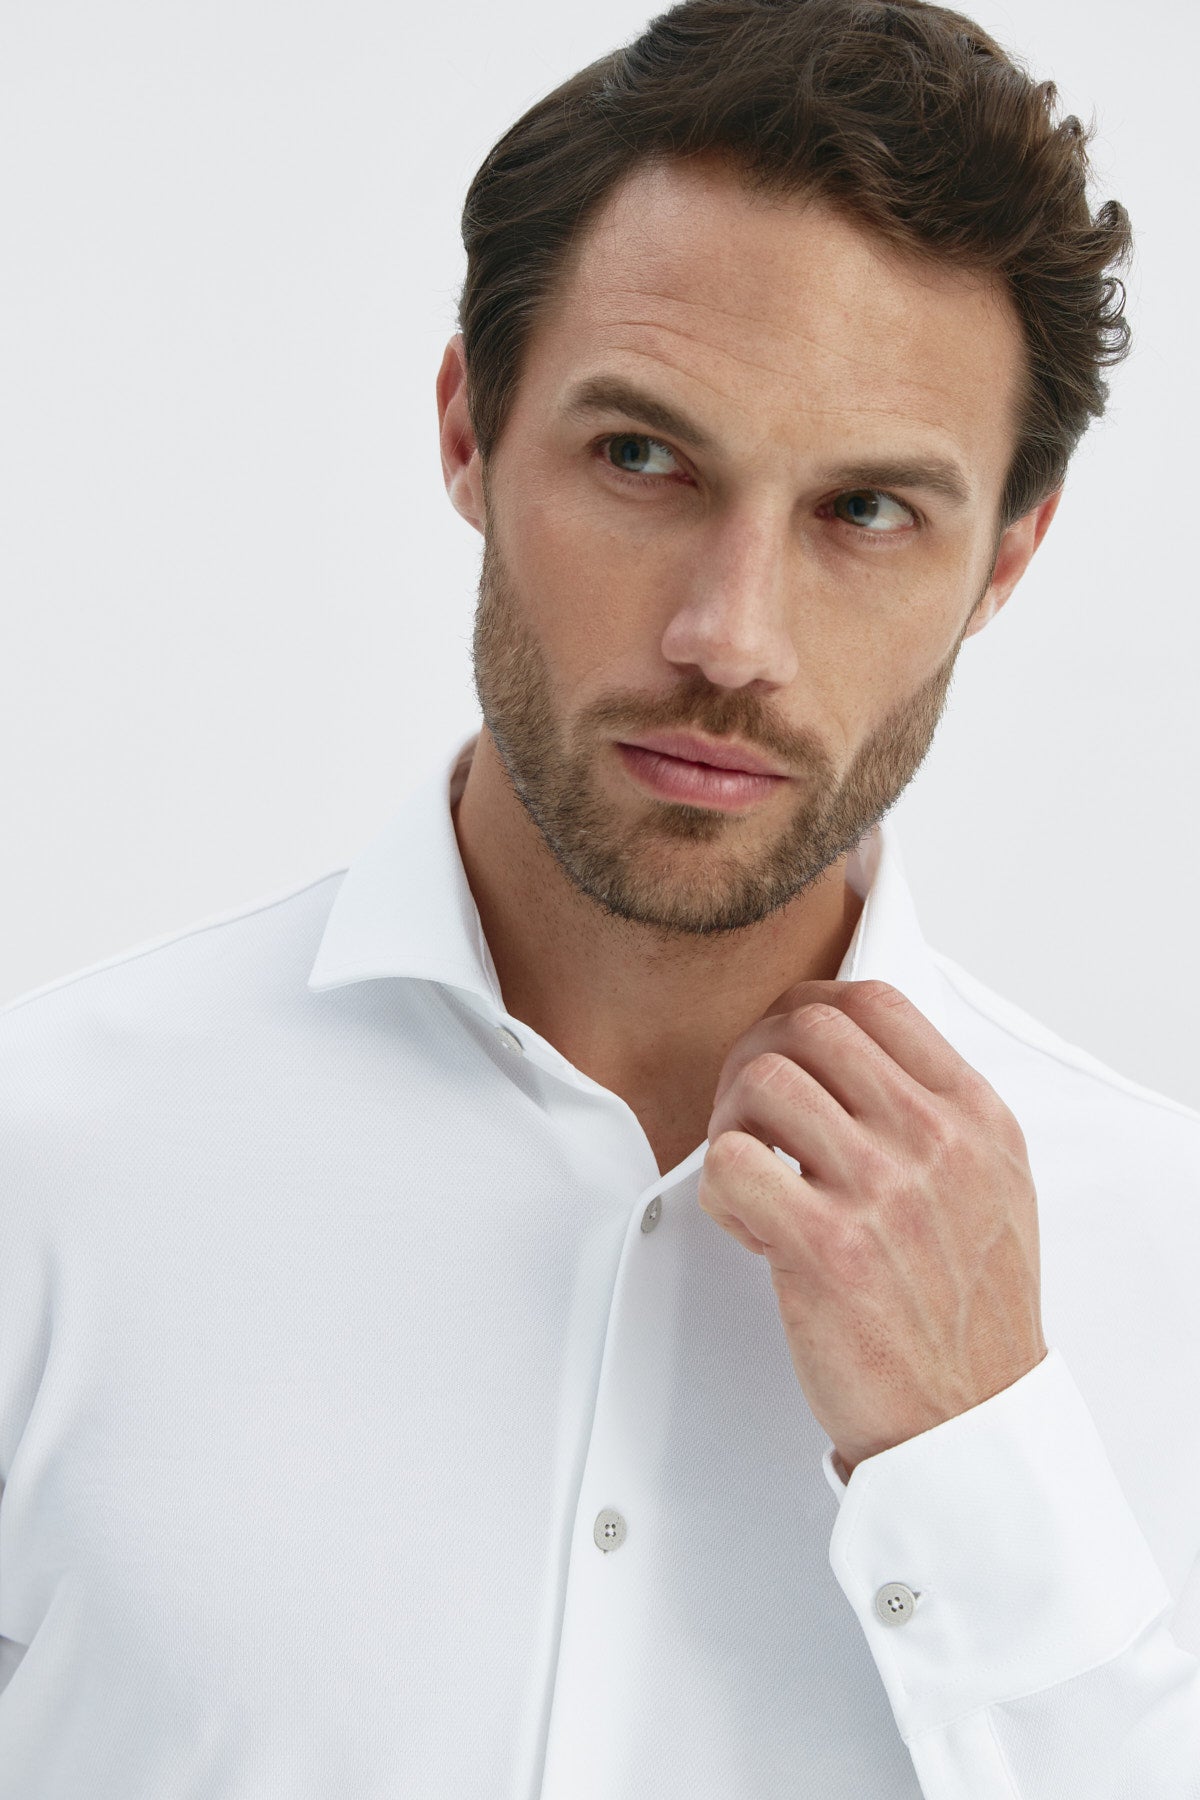 Camisa de vestir blanca de manga larga slim para hombre Sepiia: Camisa de vestir blanca de manga larga slim para hombre sin arrugas, antimanchas, perfecta para traje o americana. Foto retrato.